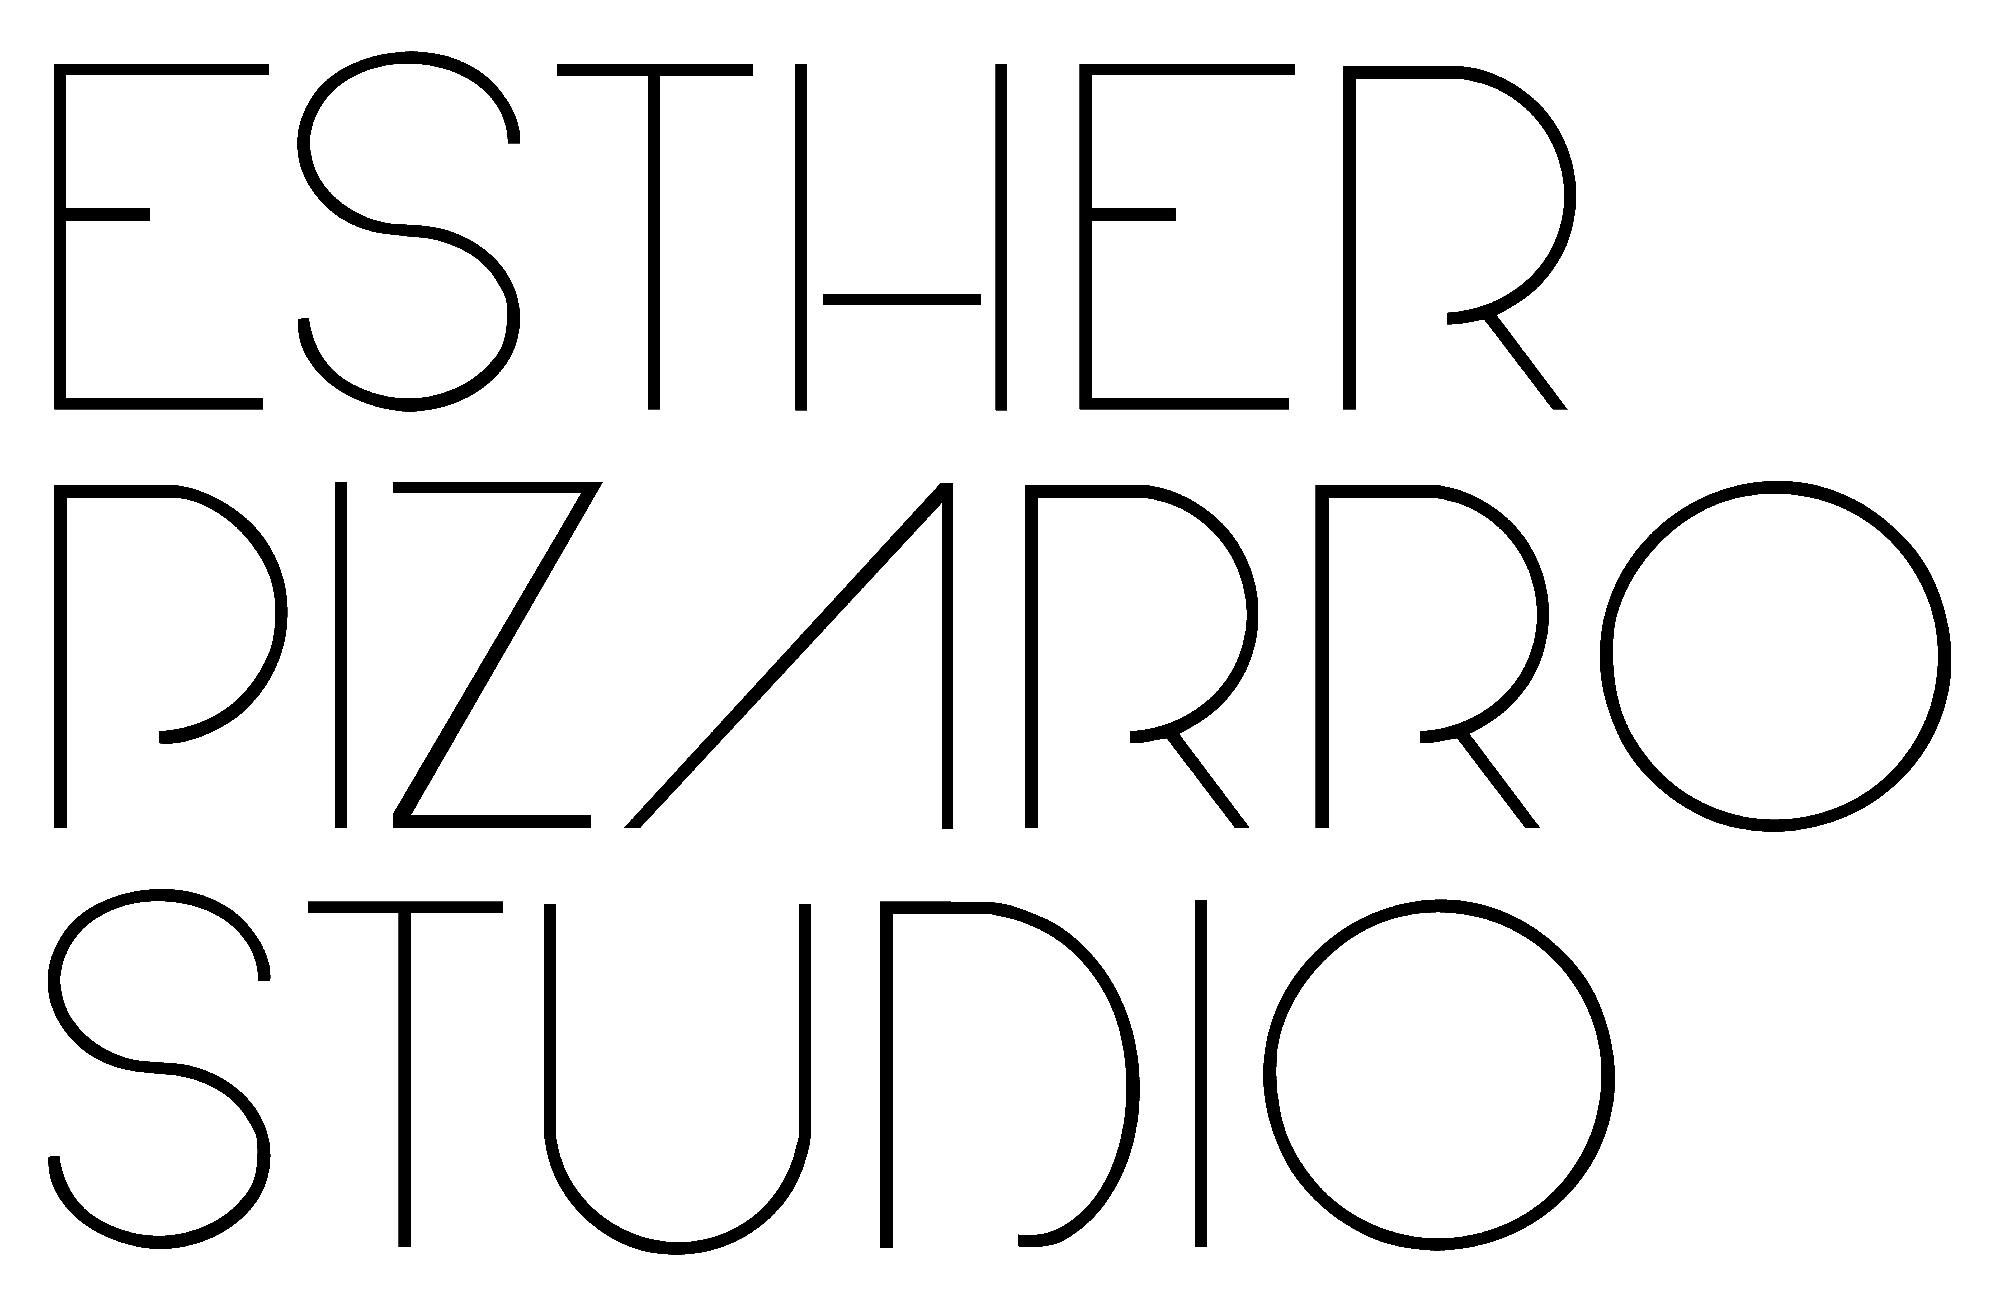 ESTHER PIZARRO STUDIO